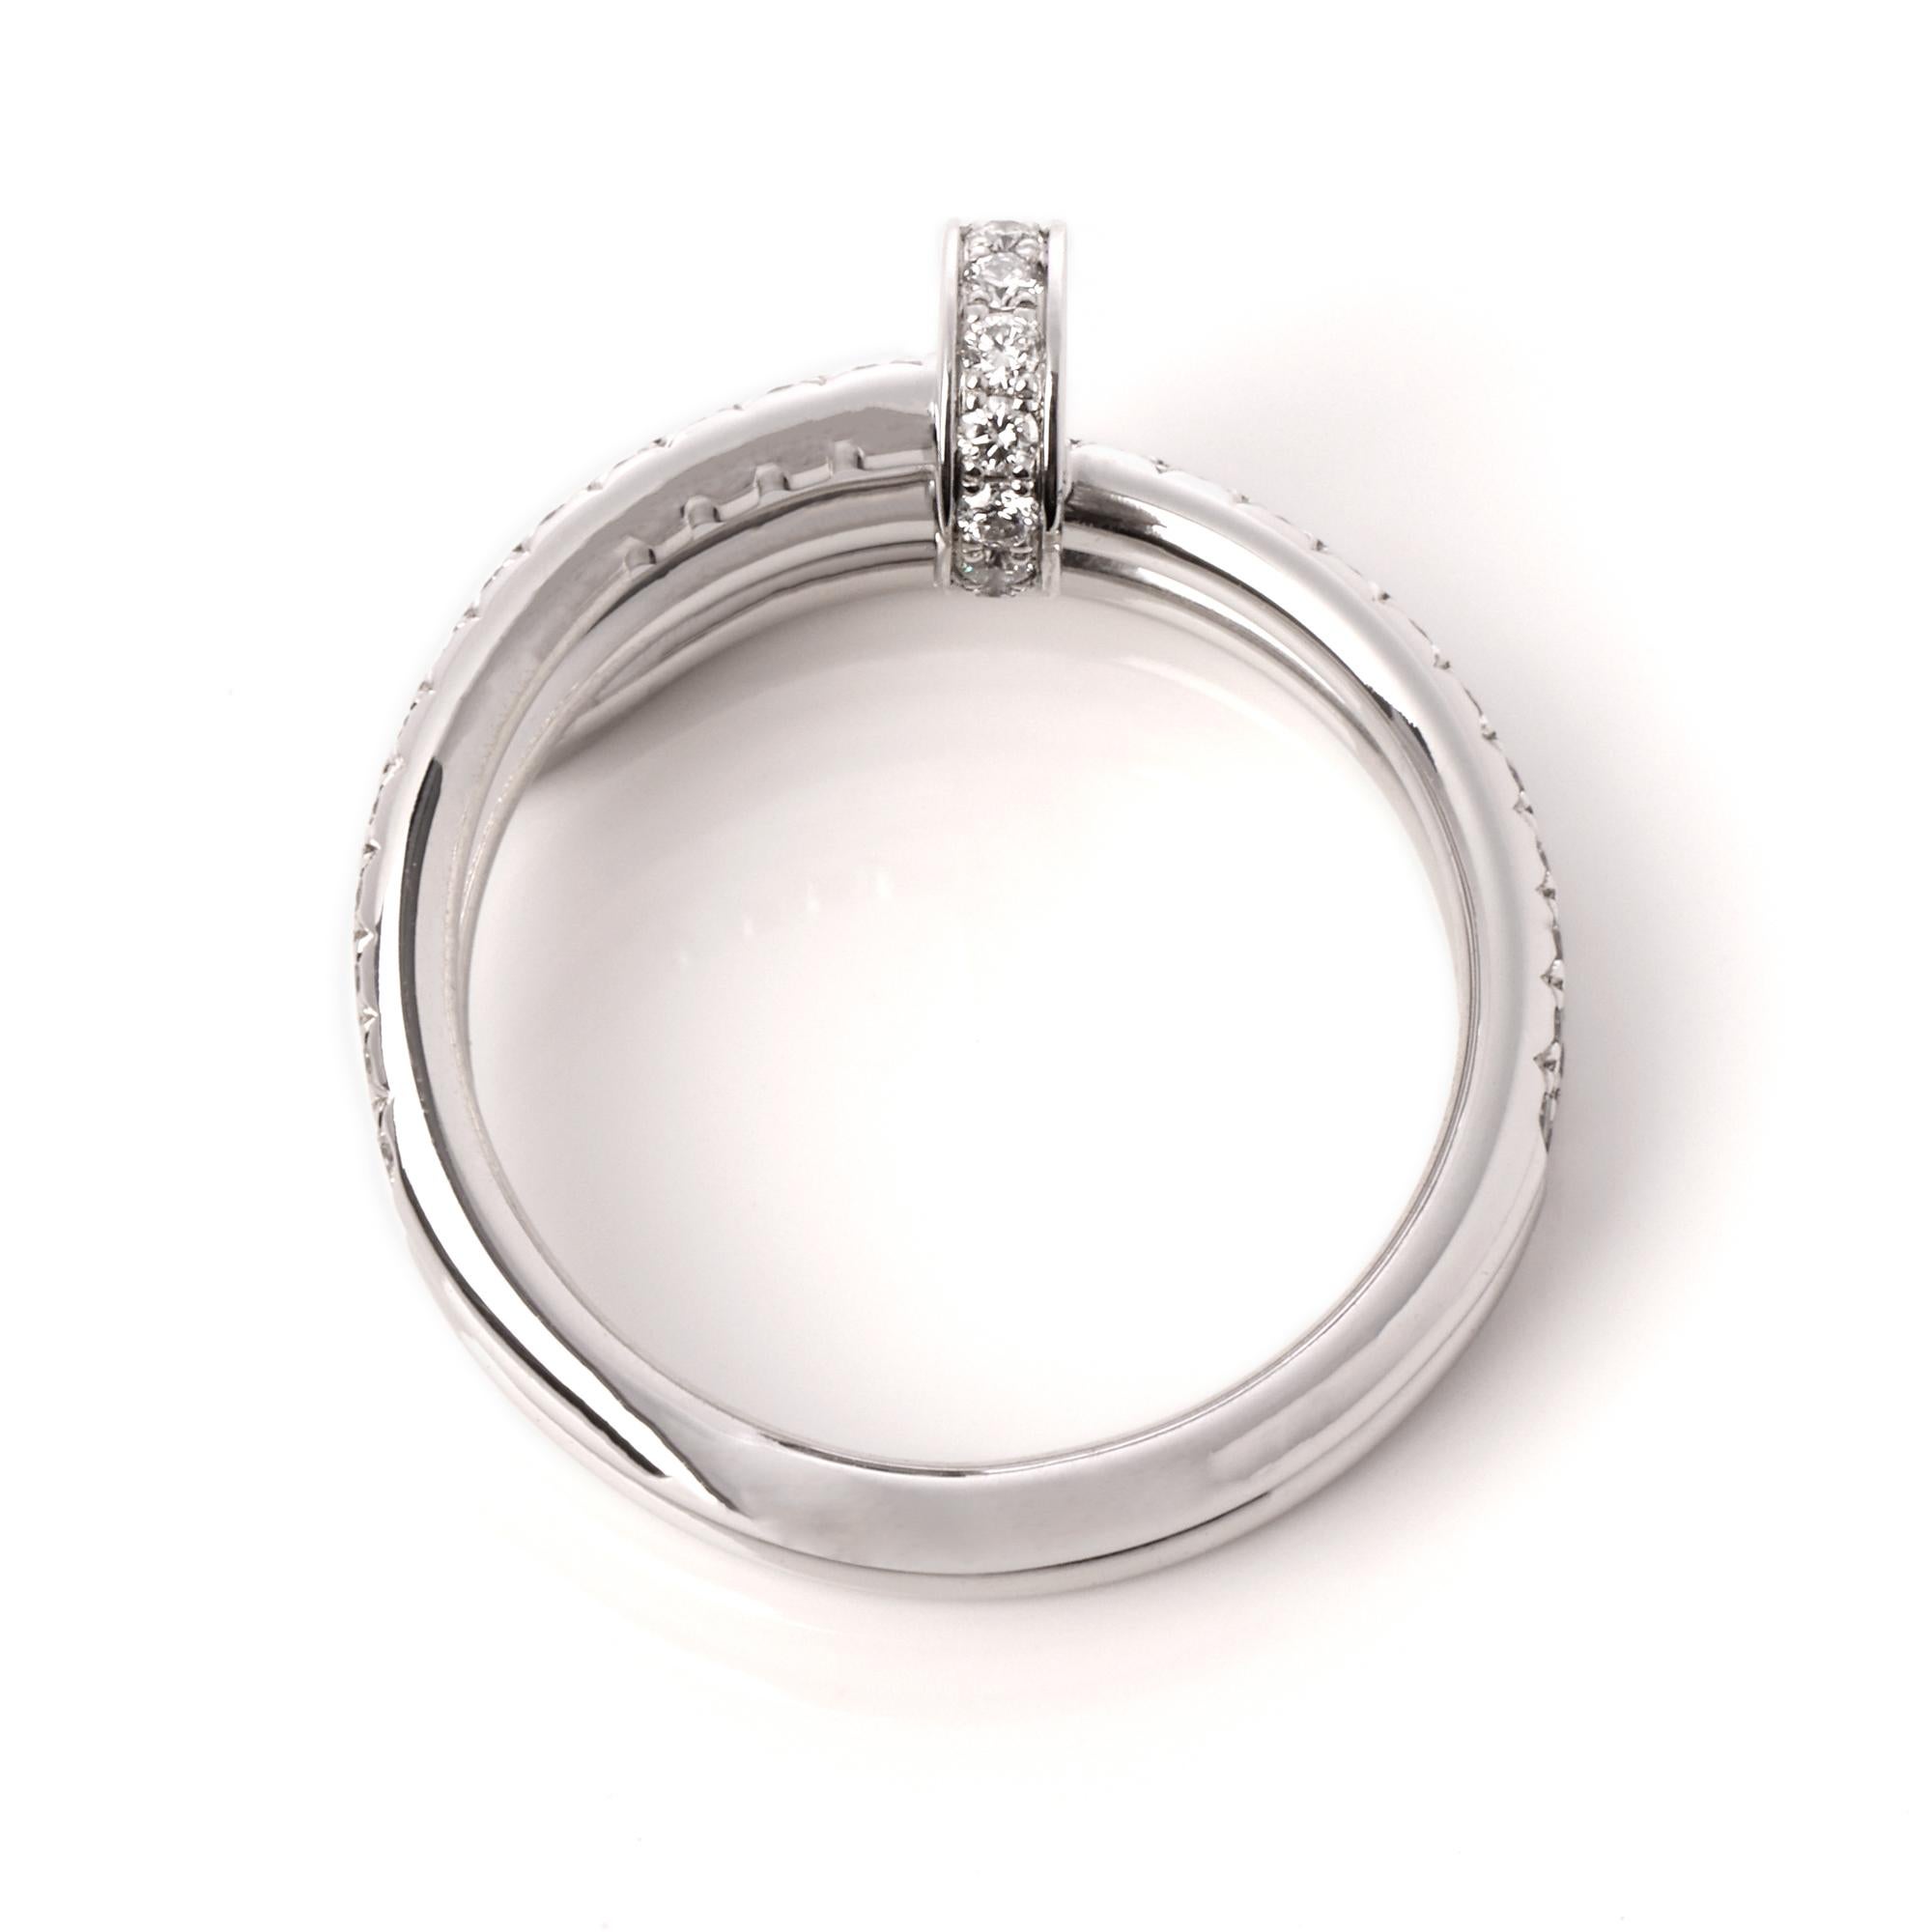 Contemporary Cartier Pave Diamond 18ct White Gold Juste Un Clou Ring For Sale